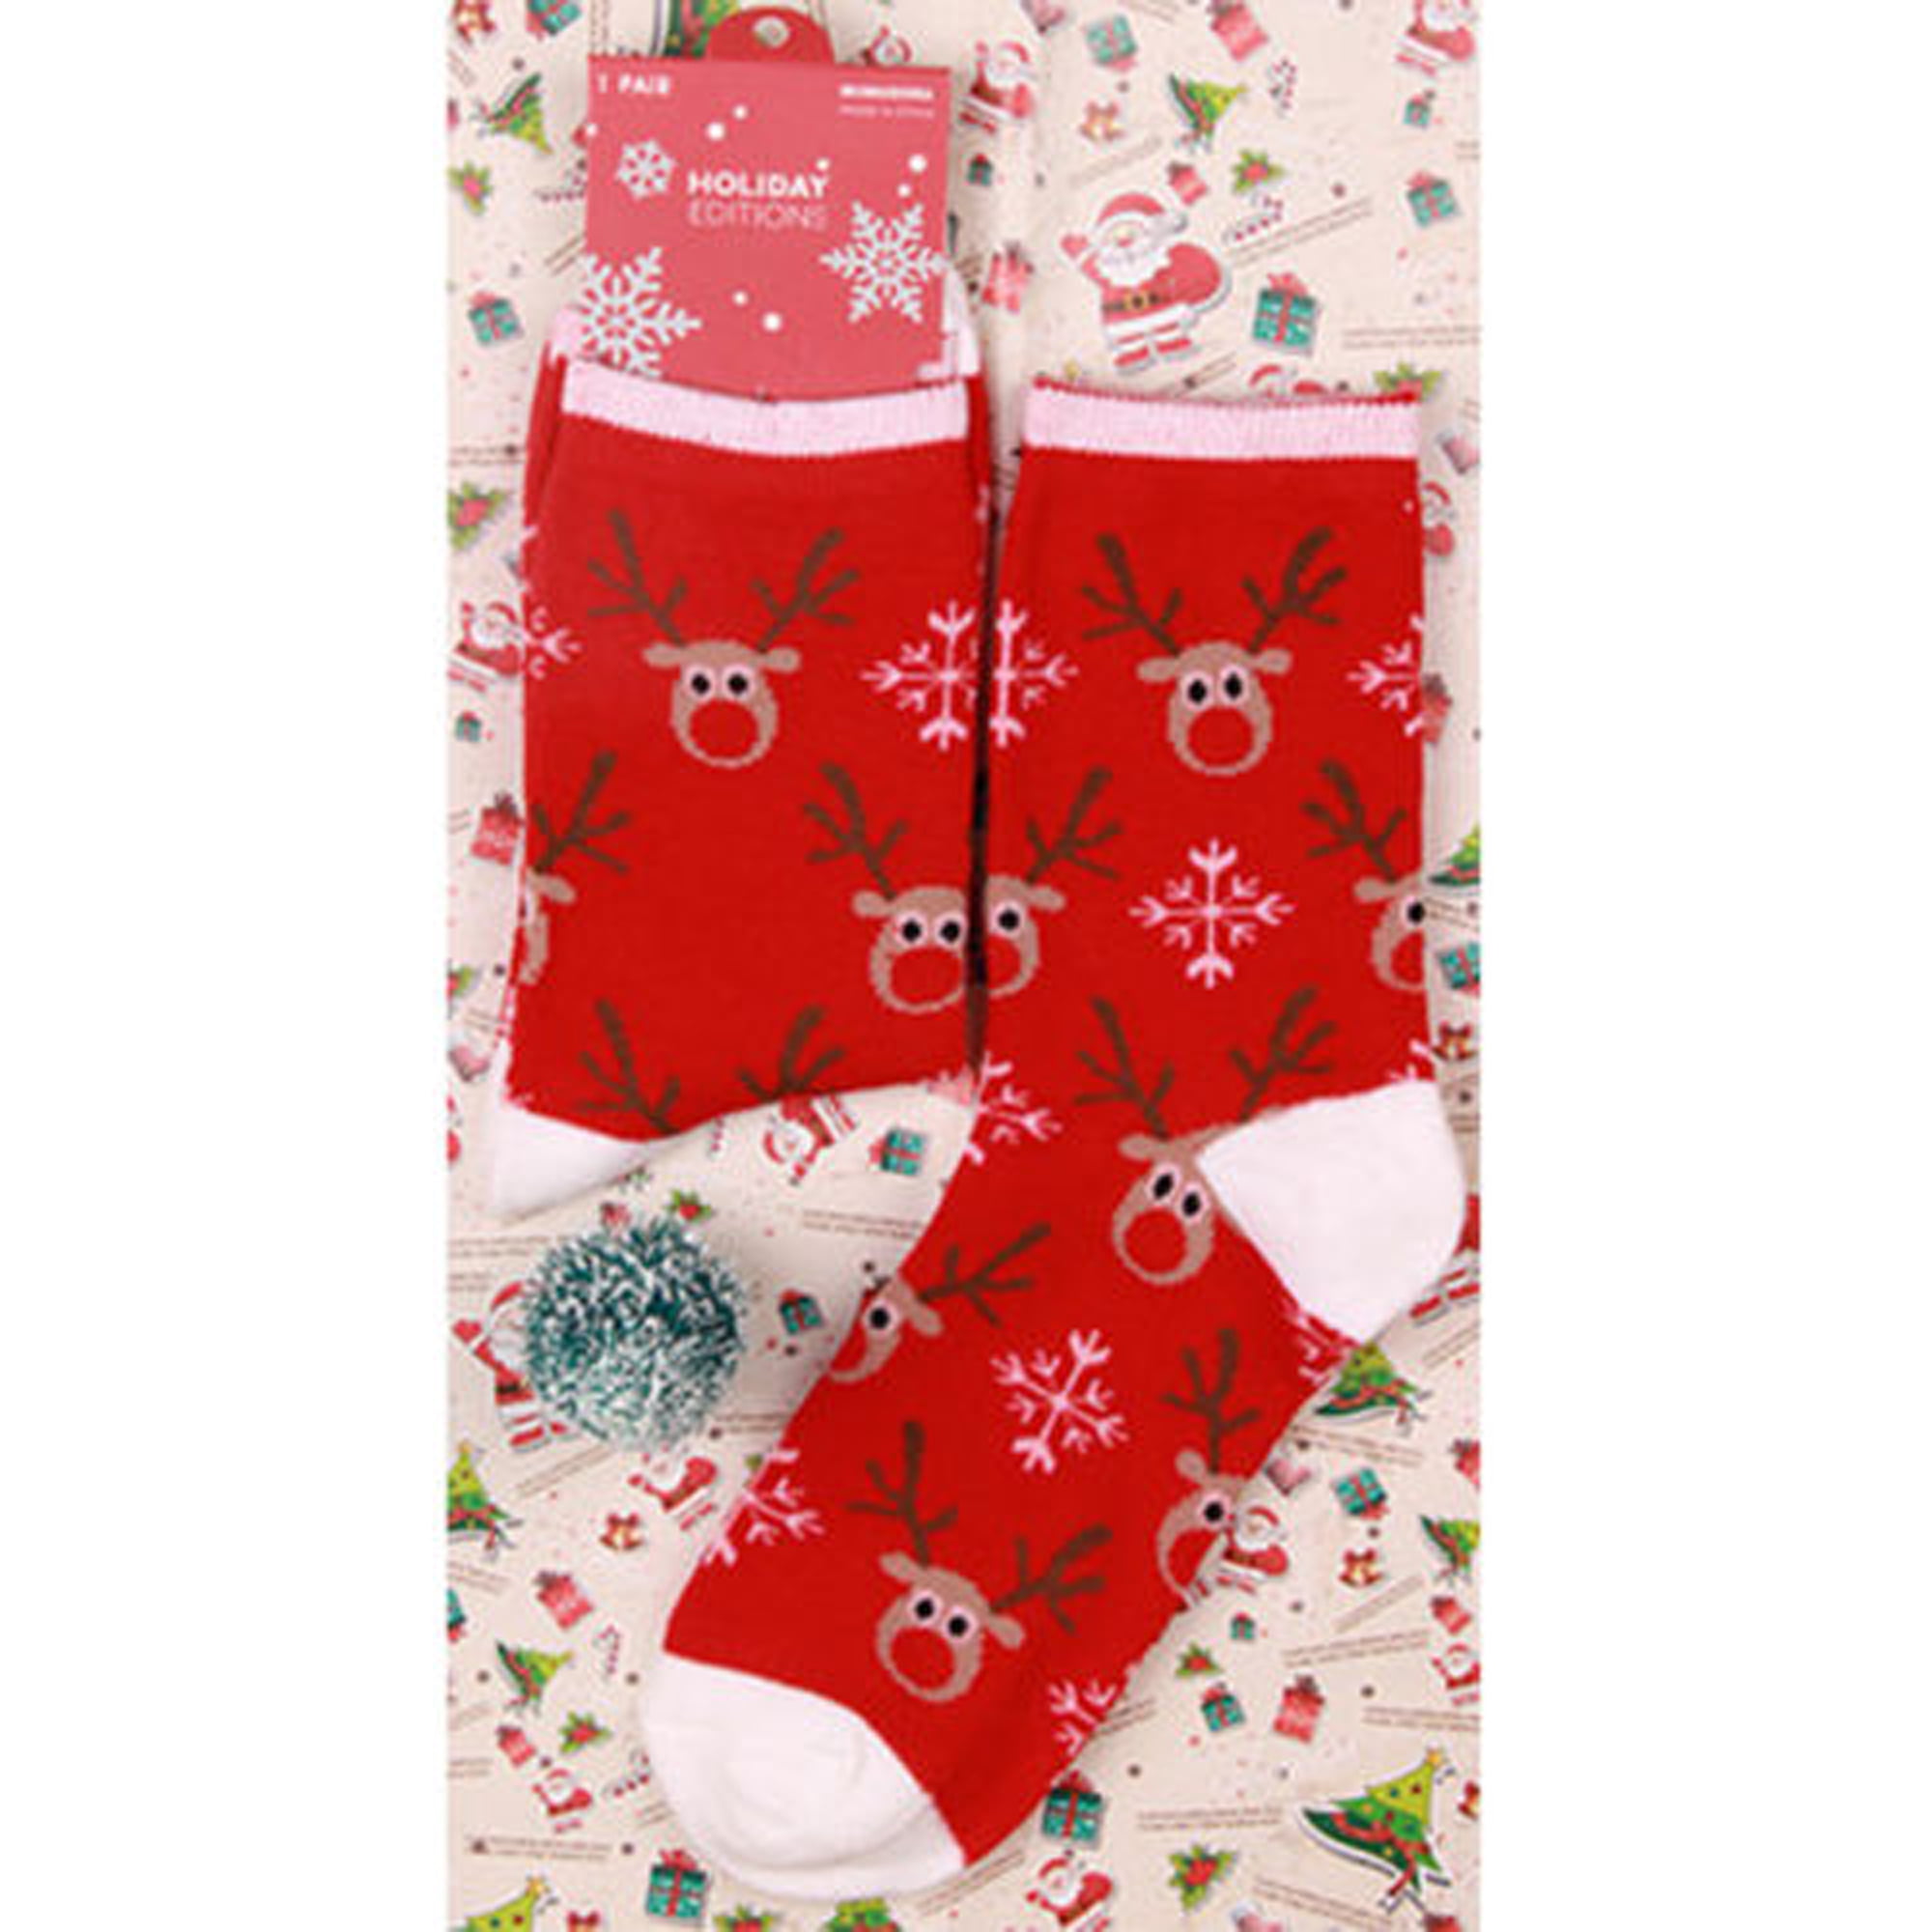 Boobs Hand Warmer Adult Reusable Winter Men's Secret Santa Stocking Filler Gift